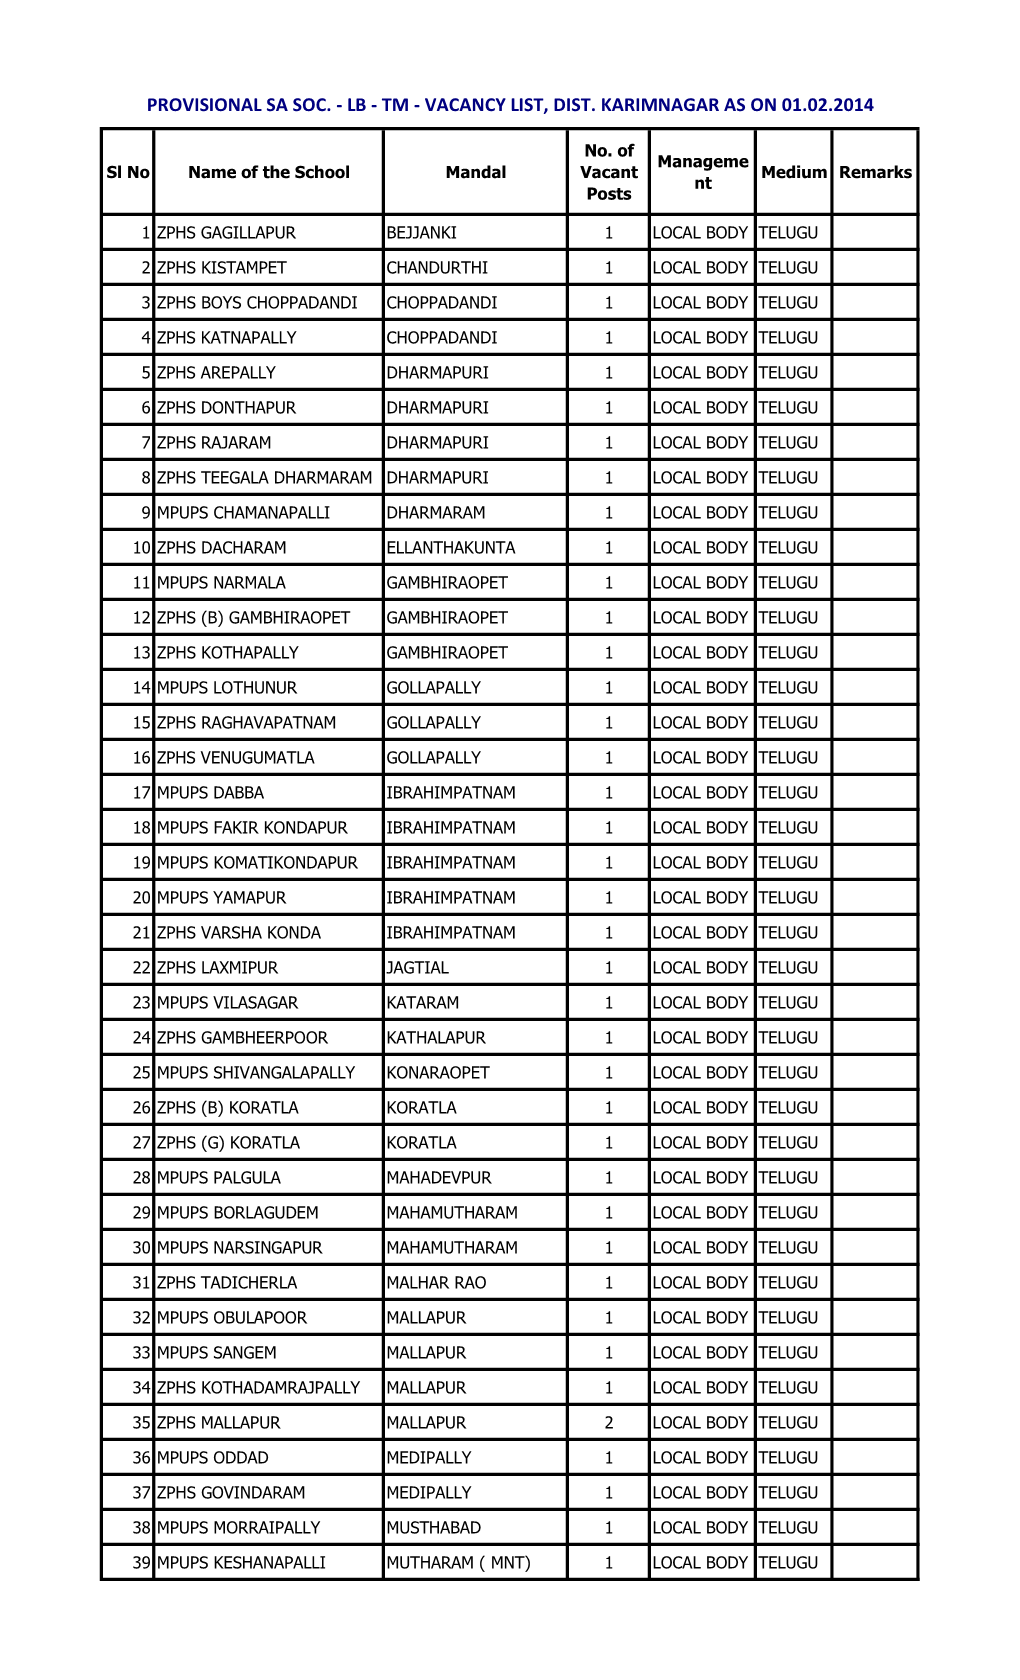 Vacancy List, Dist. Karimnagar As on 01.02.2014